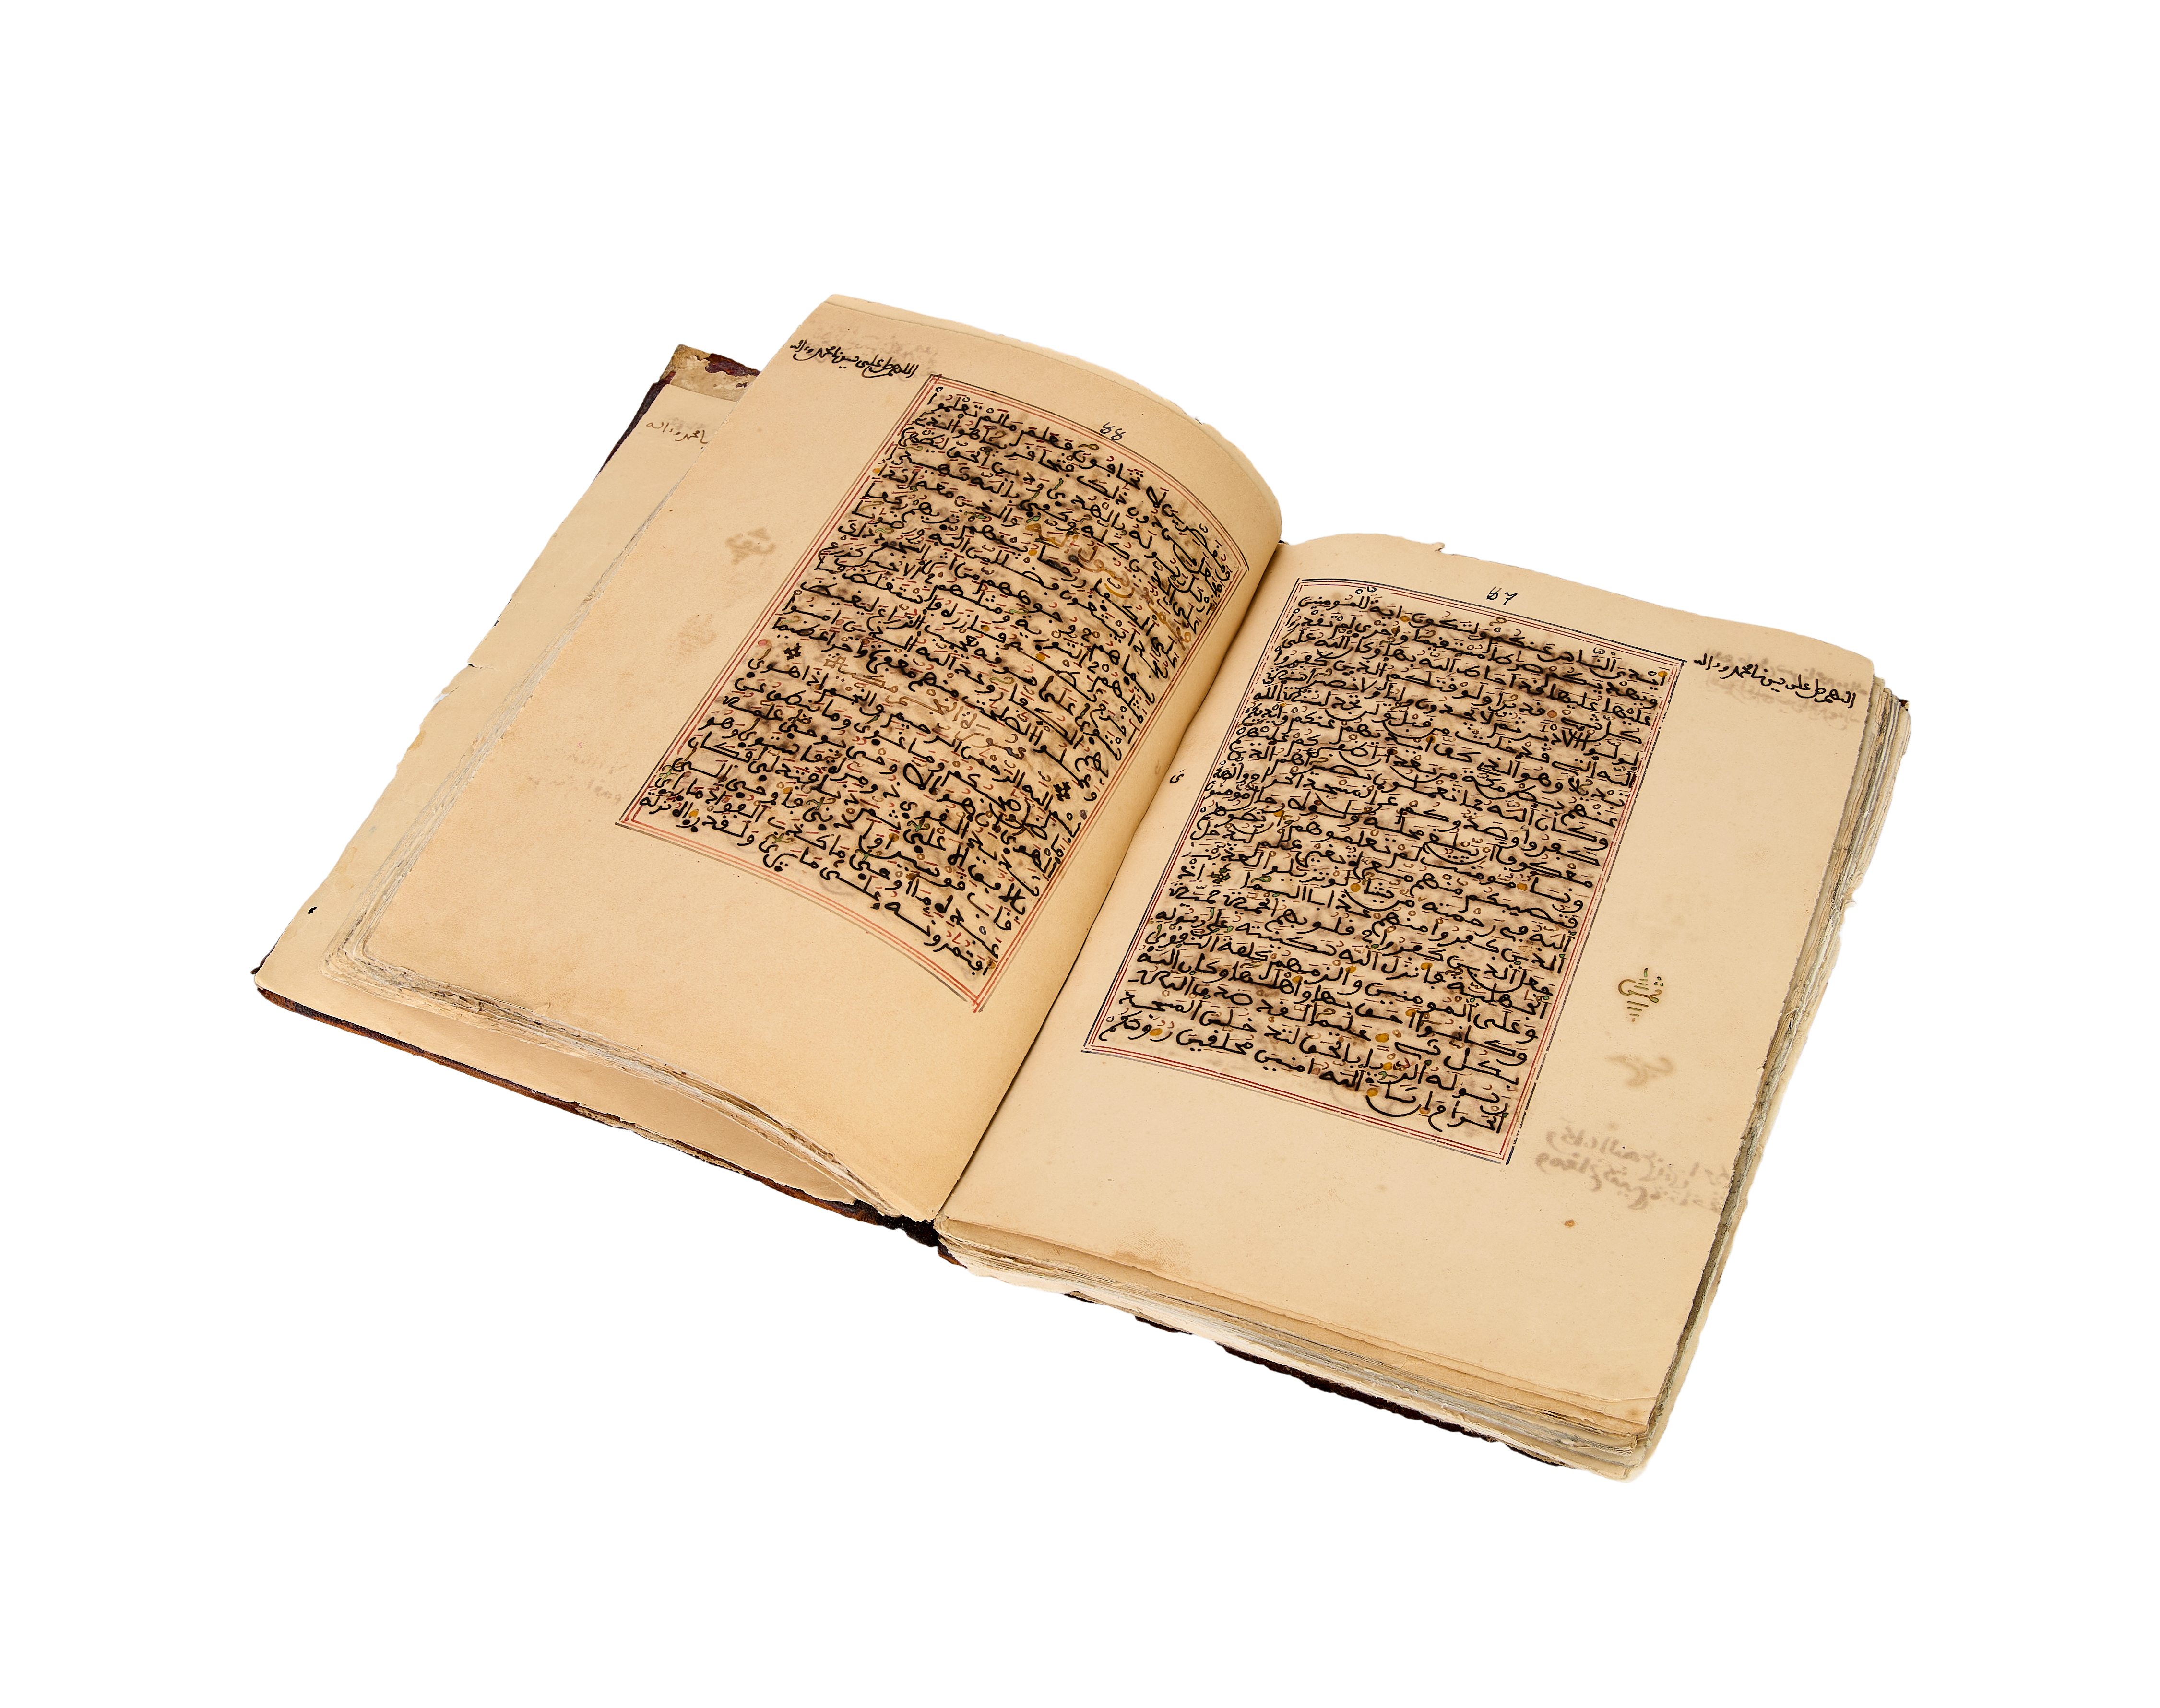 A PRAYER BOOK IN MAGHRIBI SCRIPT, DATED 1327AH, 18TH CENTURY, NORTH AFRICA